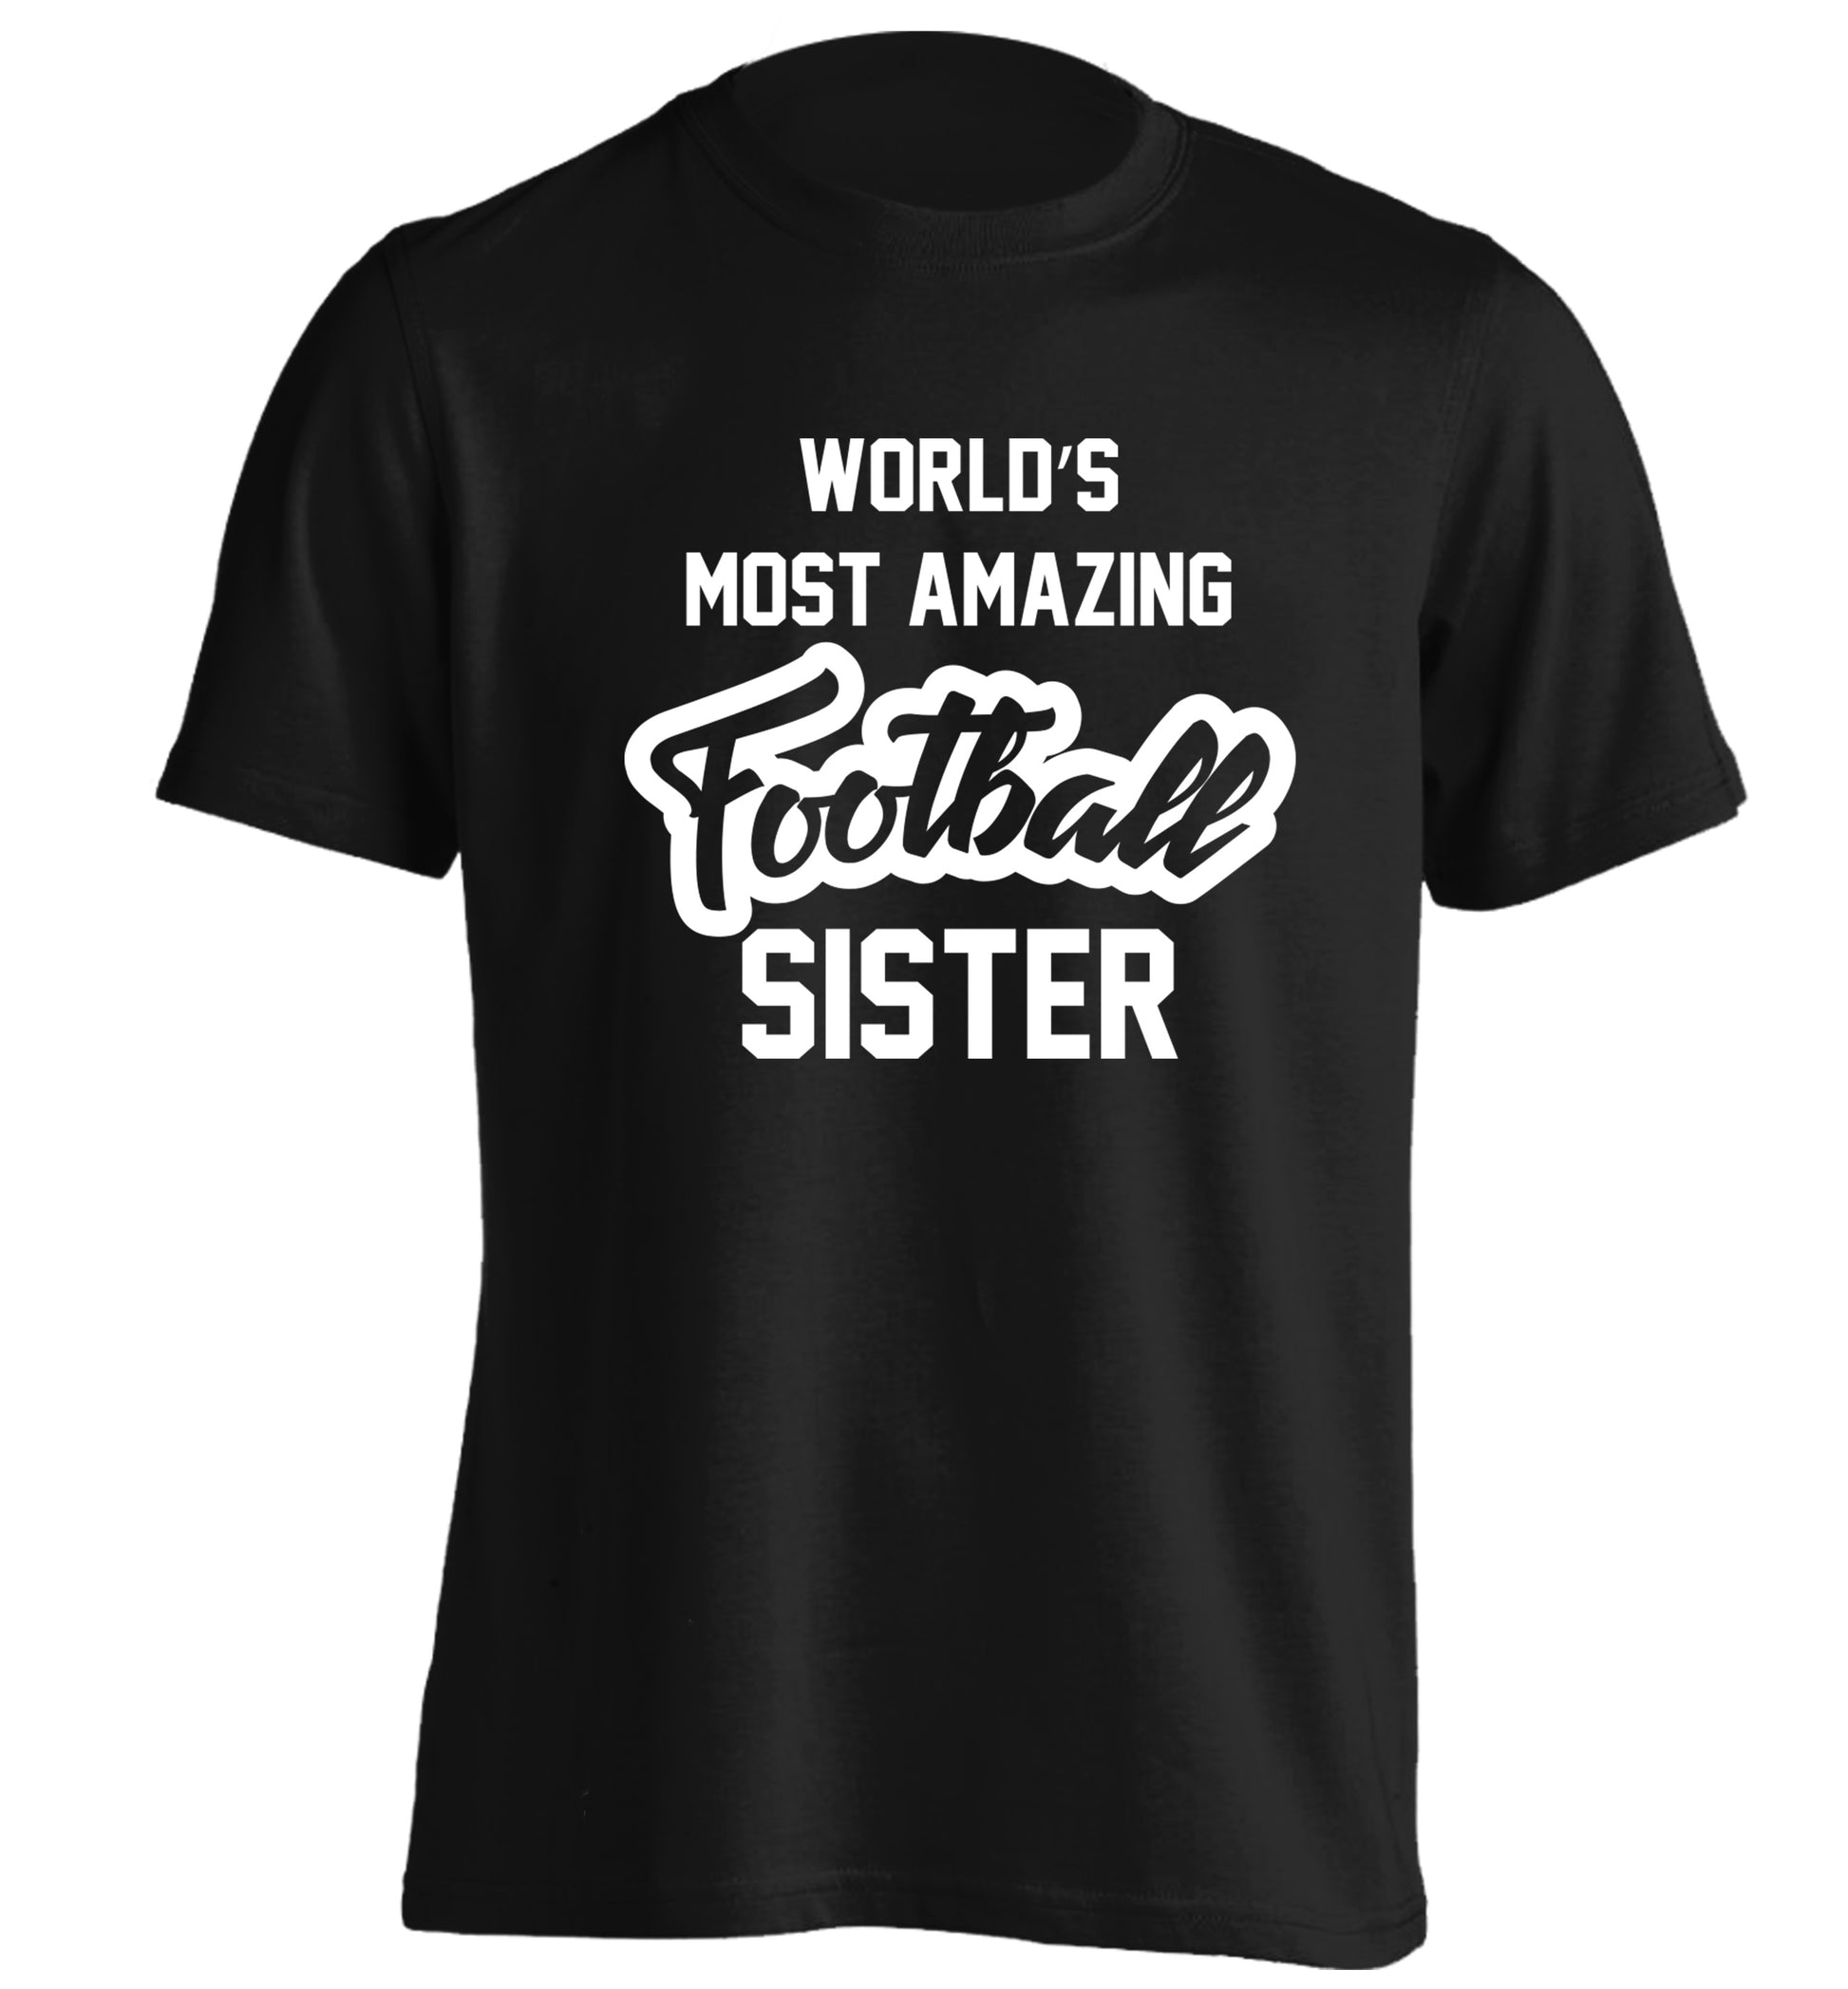 Worlds most amazing football sister adults unisexblack Tshirt 2XL